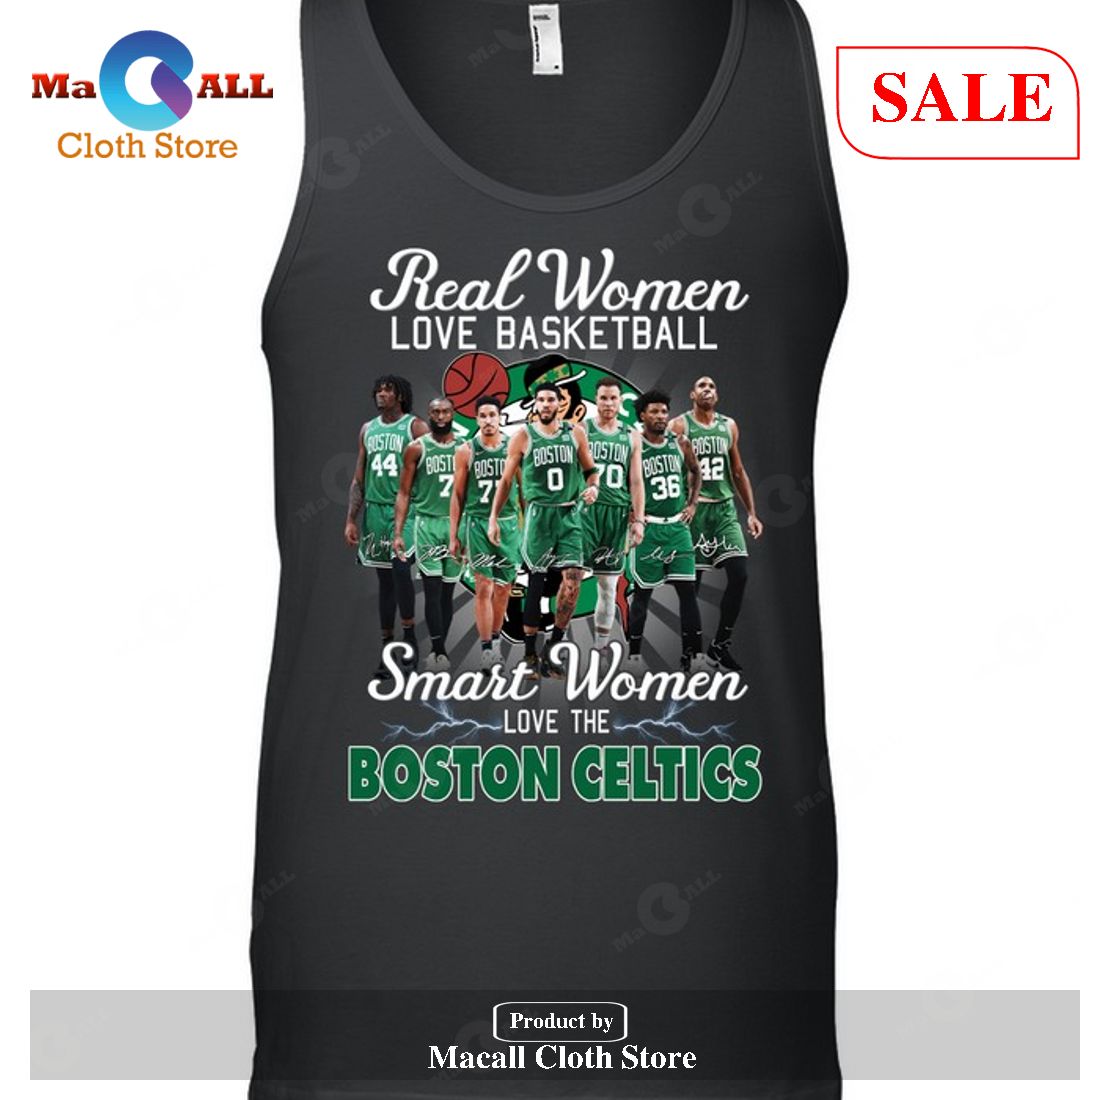 Real Women Love Basketball Boston Celtics T Shirt, Cheap Womens